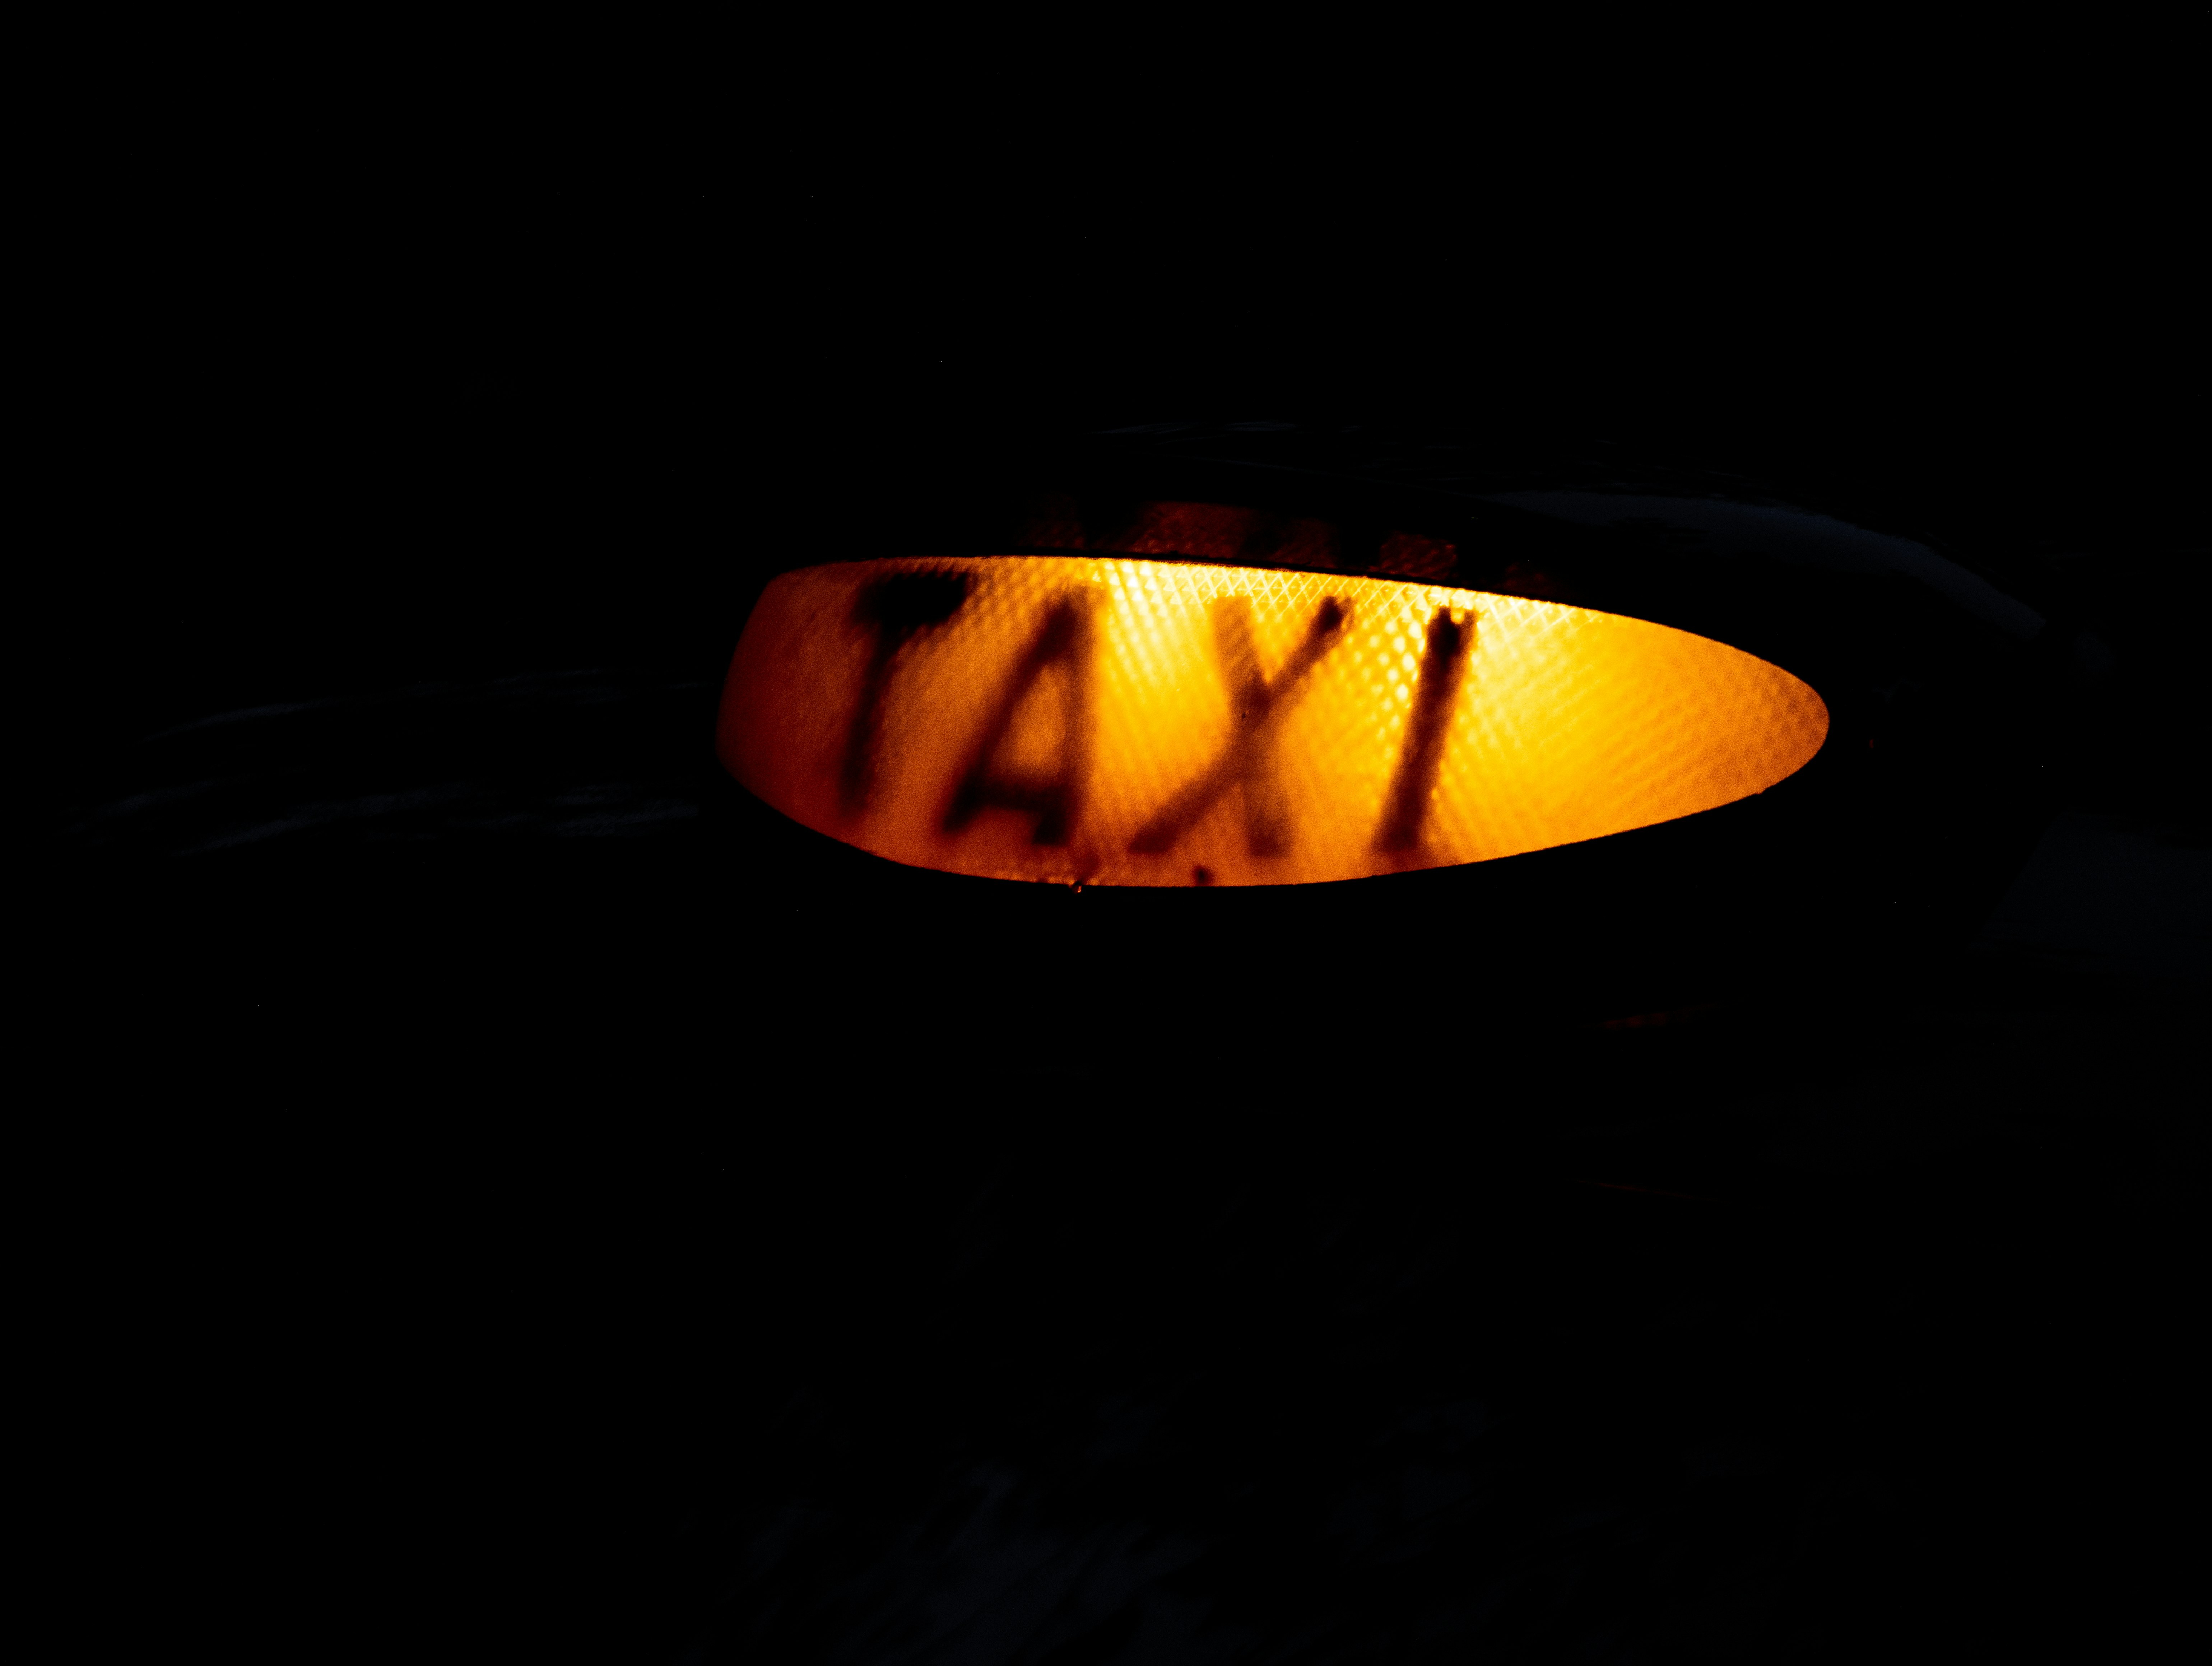 Illuminated orange London taxi sign, isolated on a black background.